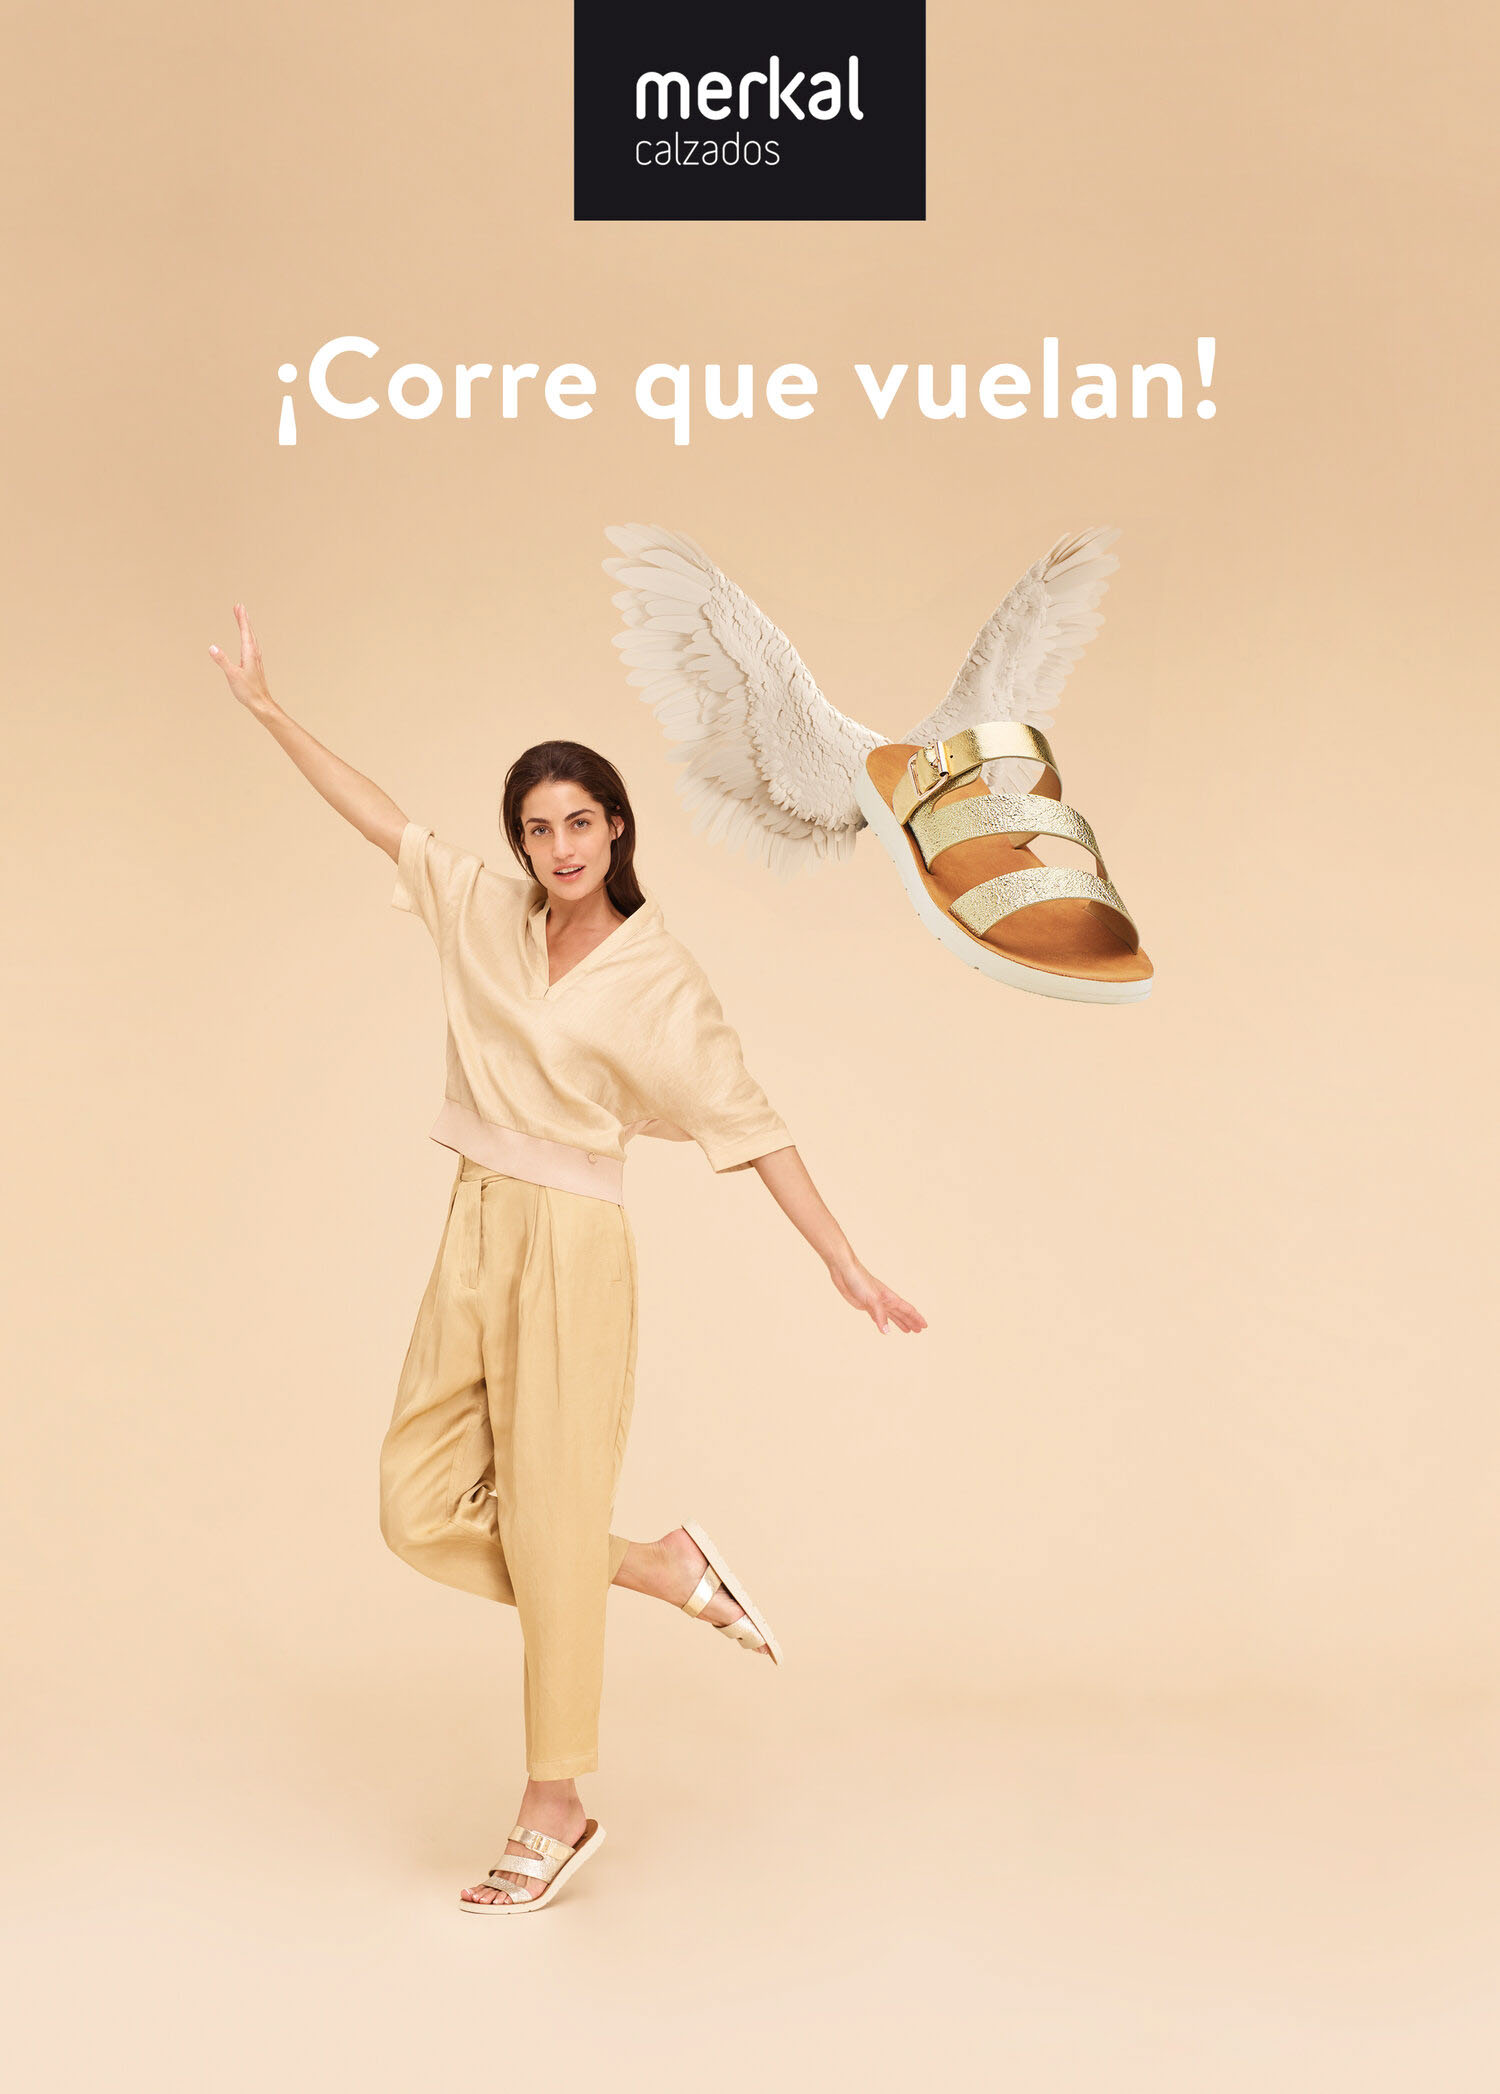 Campaña publicitaria realizada por la fotógrafa Cristina López junto a Enri Mür Studio para calzados Merkal.